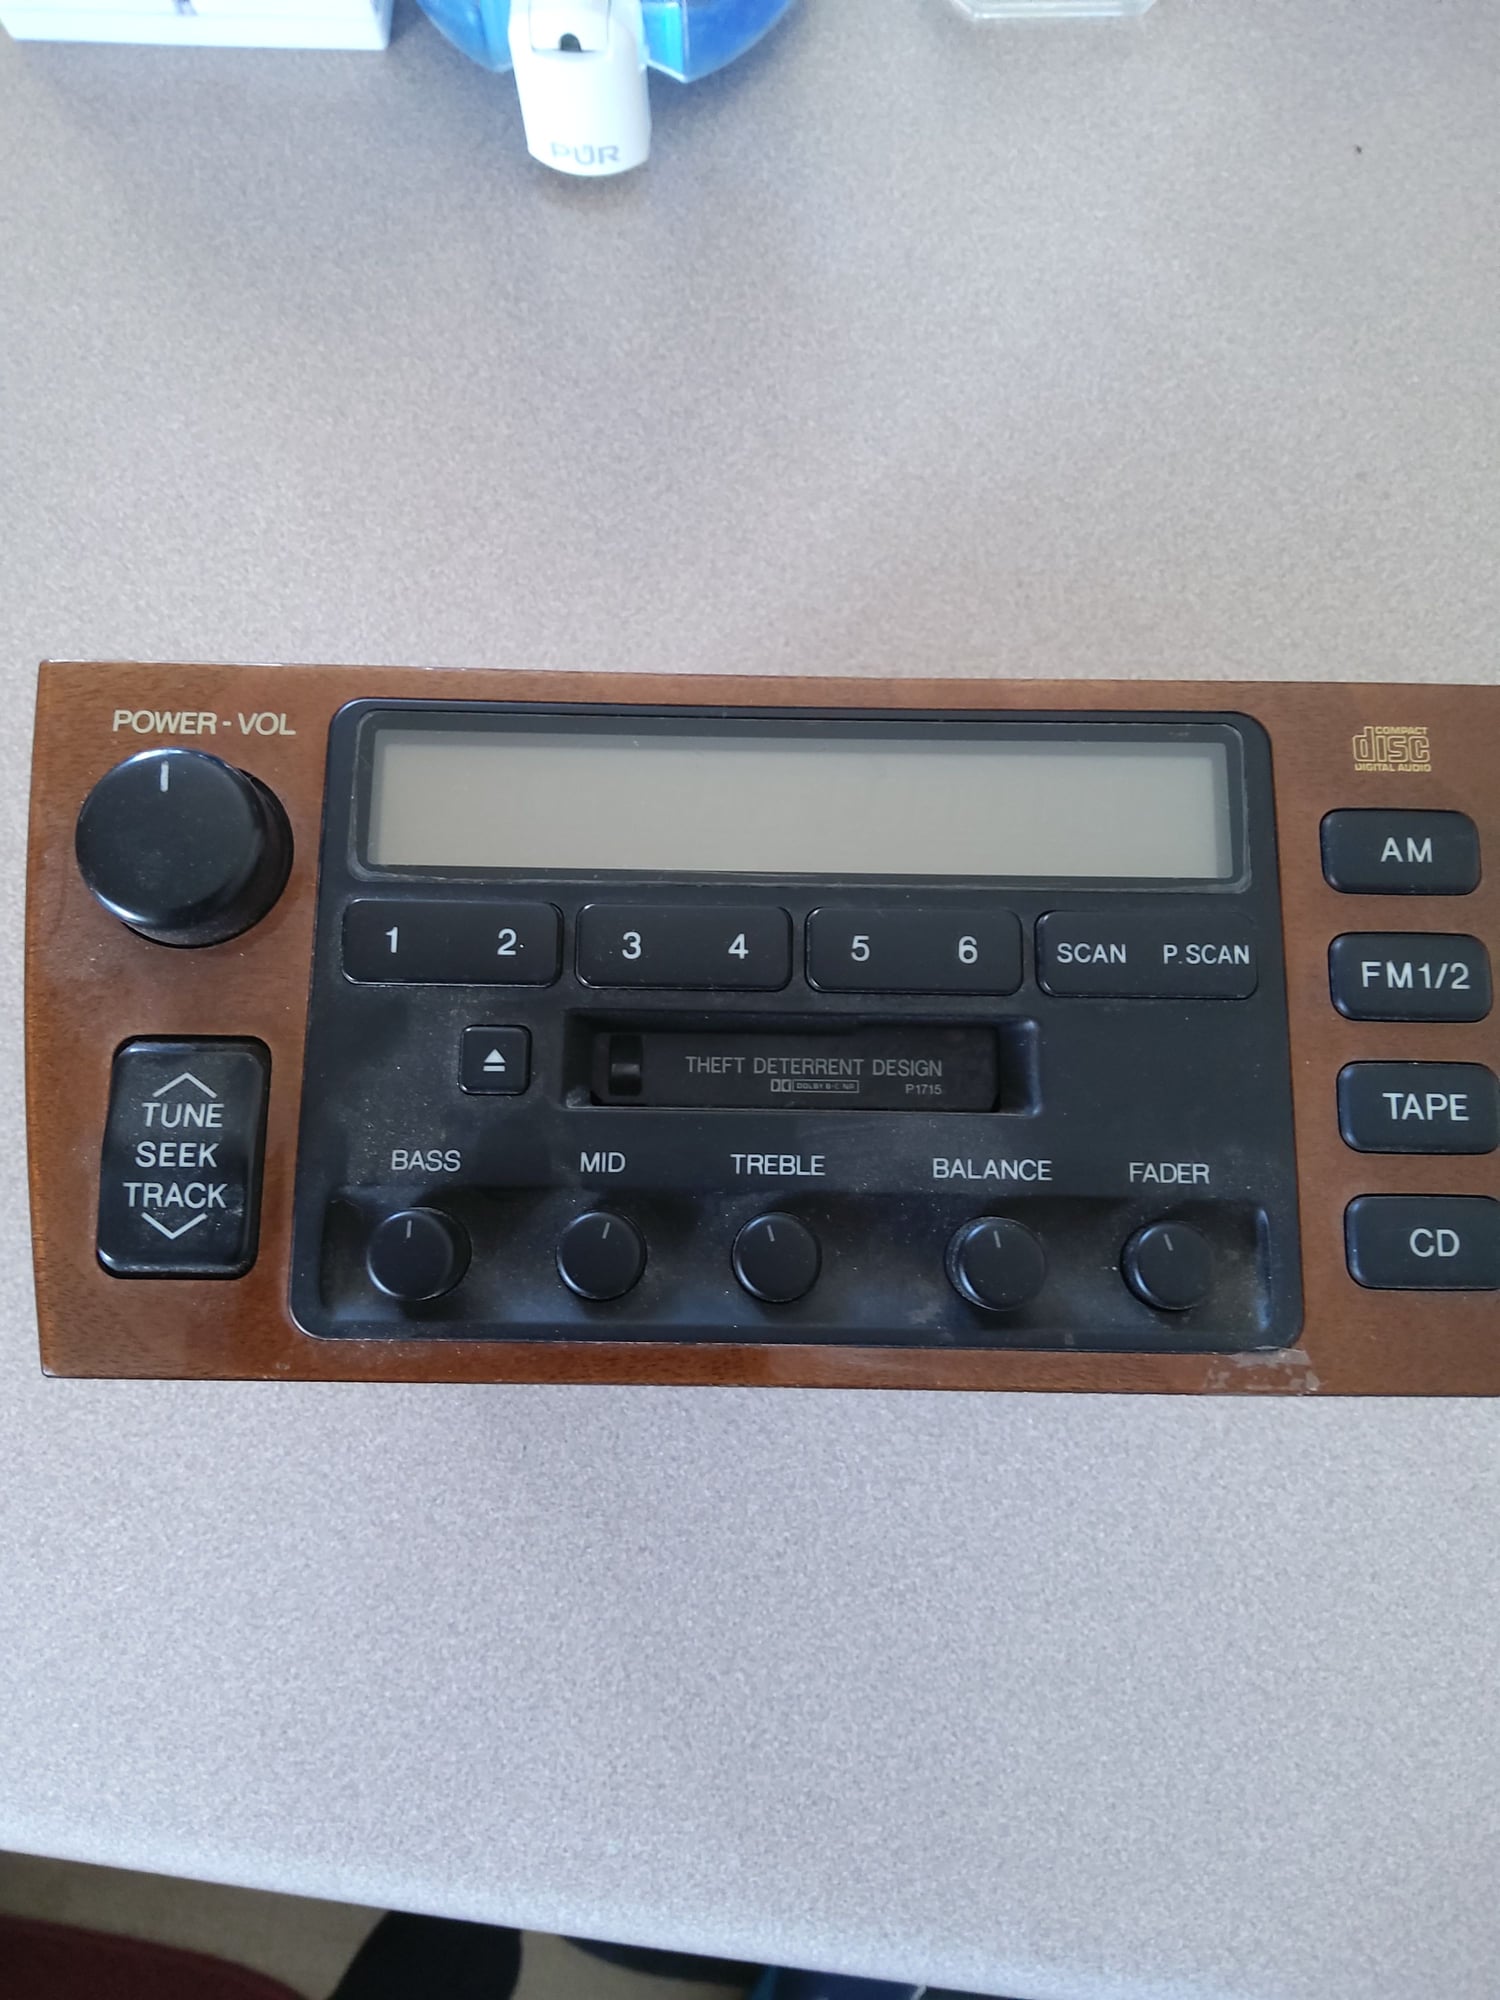 Audio Video/Electronics - 1997 ES300 Pioneer Premium Sound System - Used - 1997 to 1998 Lexus ES300 - Prescott Valley, AZ 86315, United States